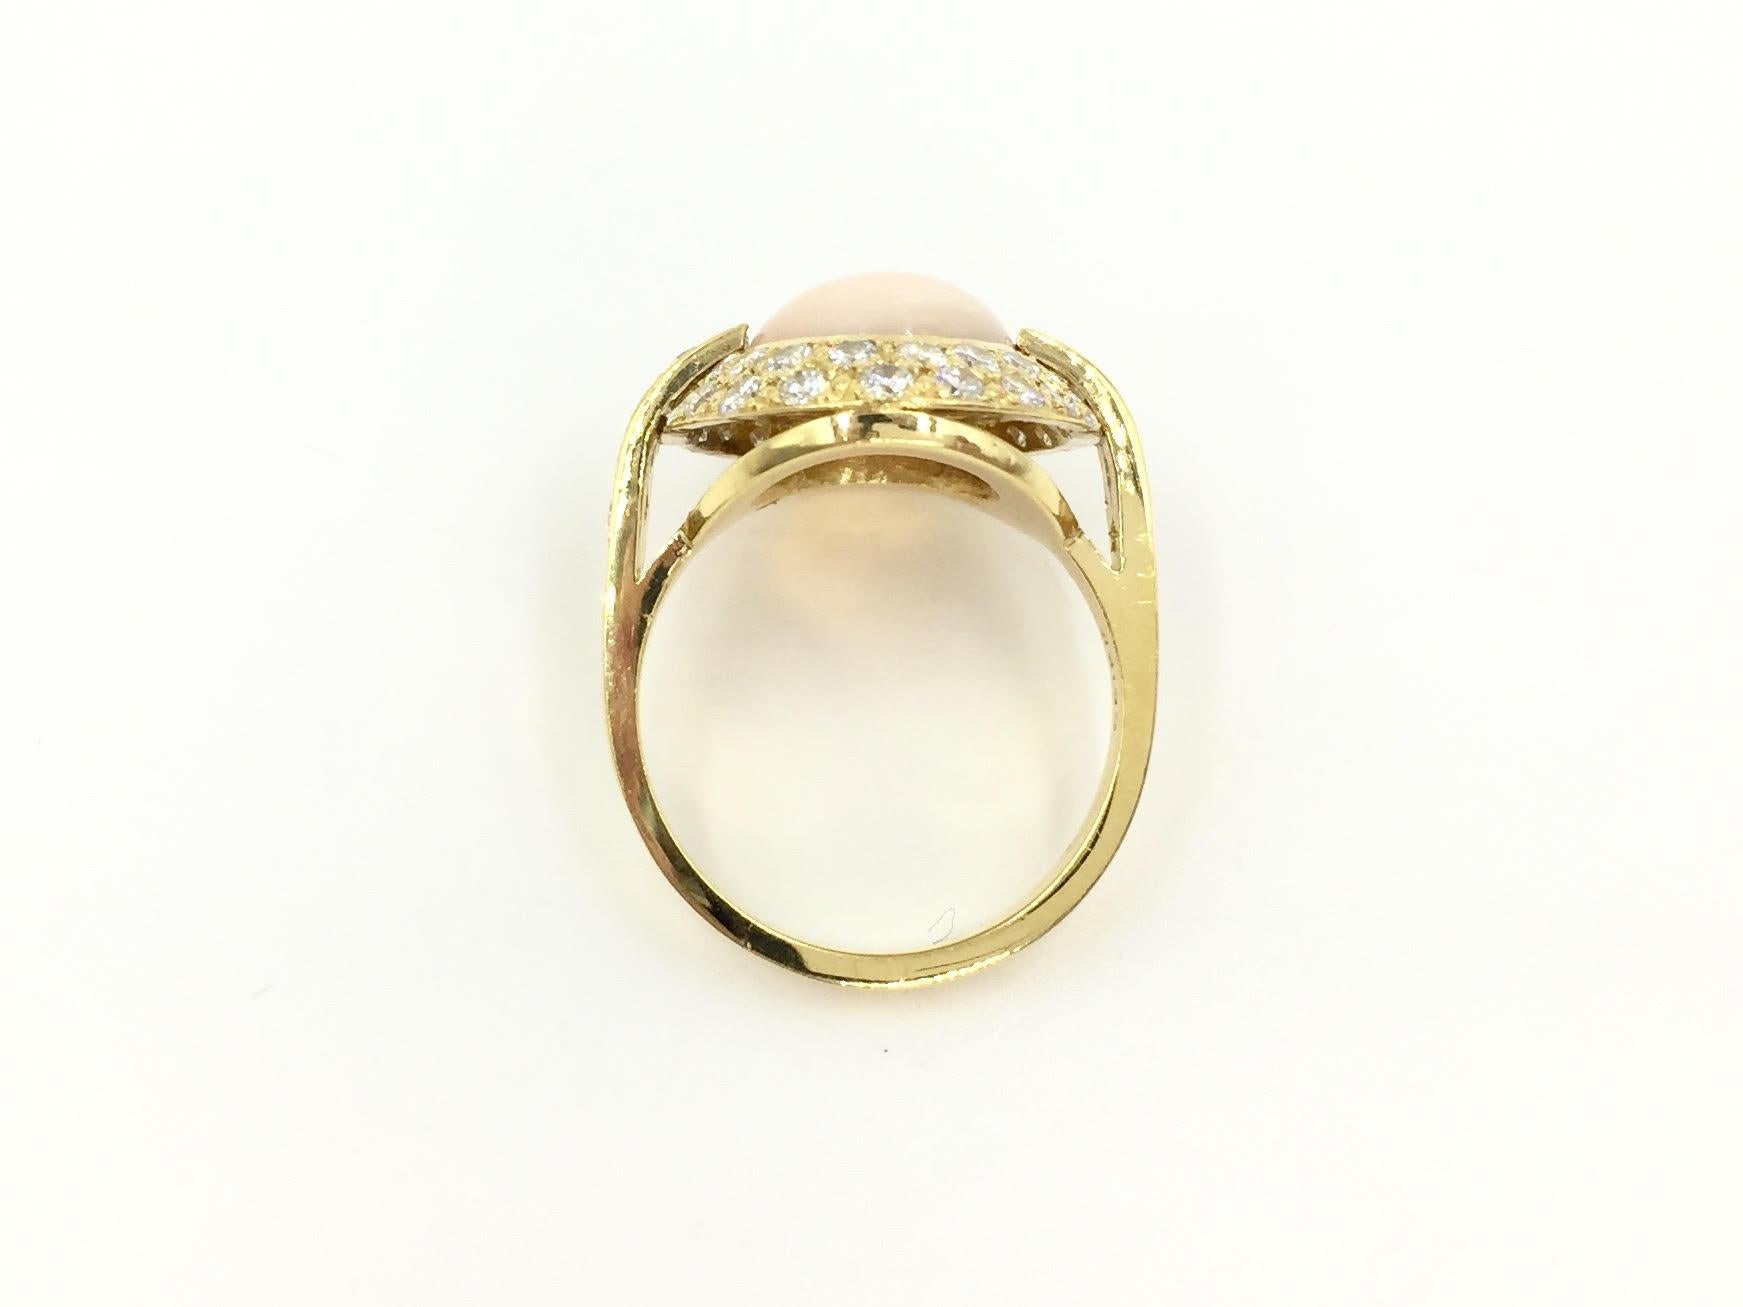 oval pave diamond ring